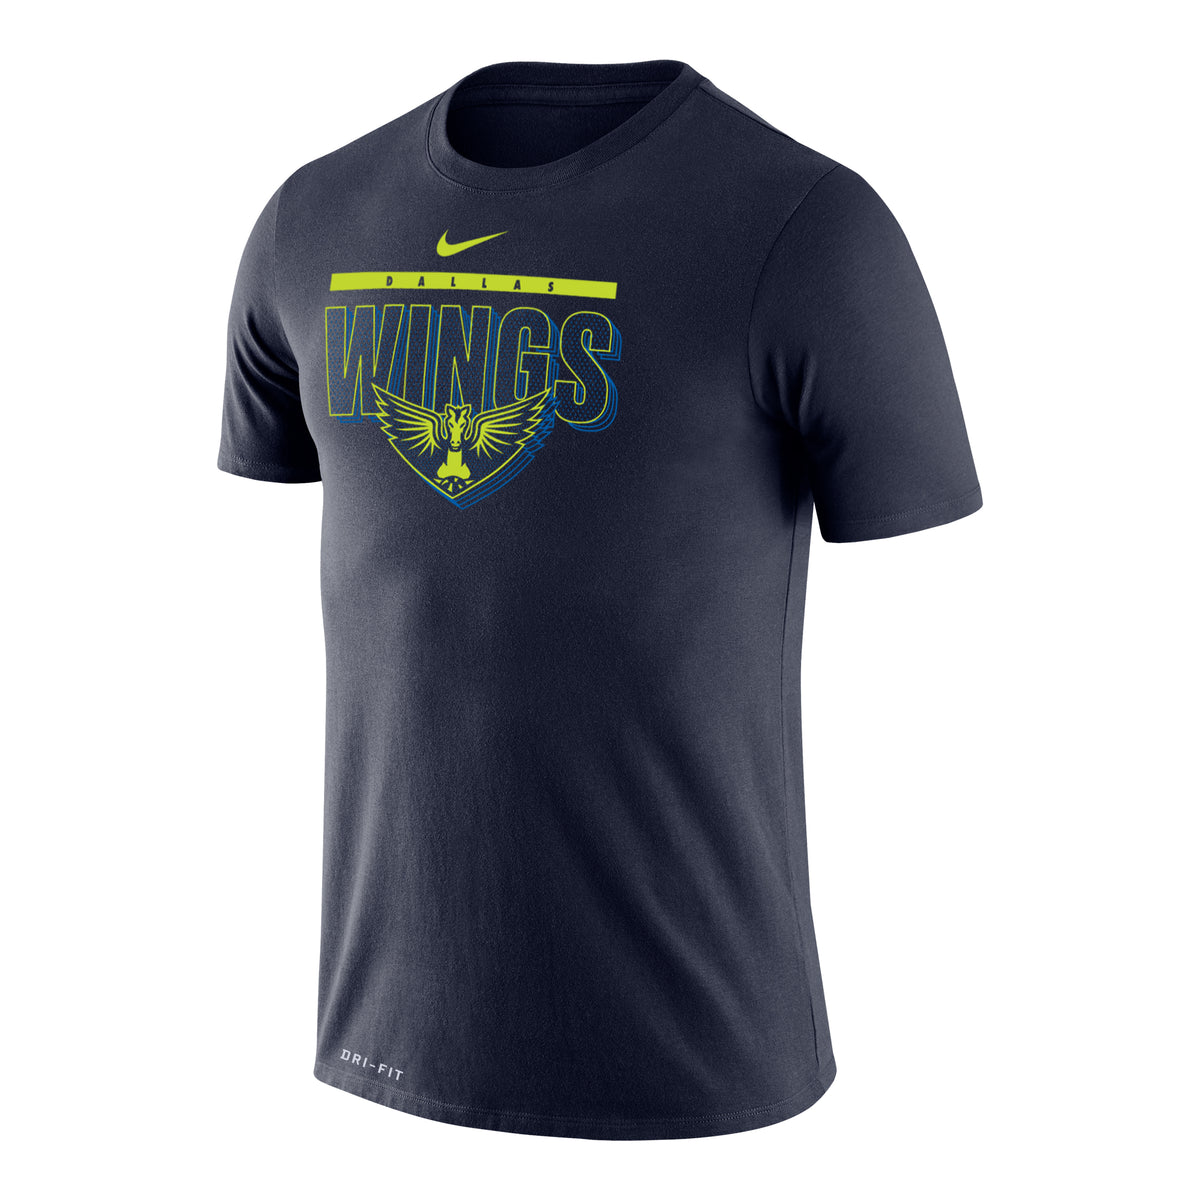 Nike Wings Legend T-Shirt